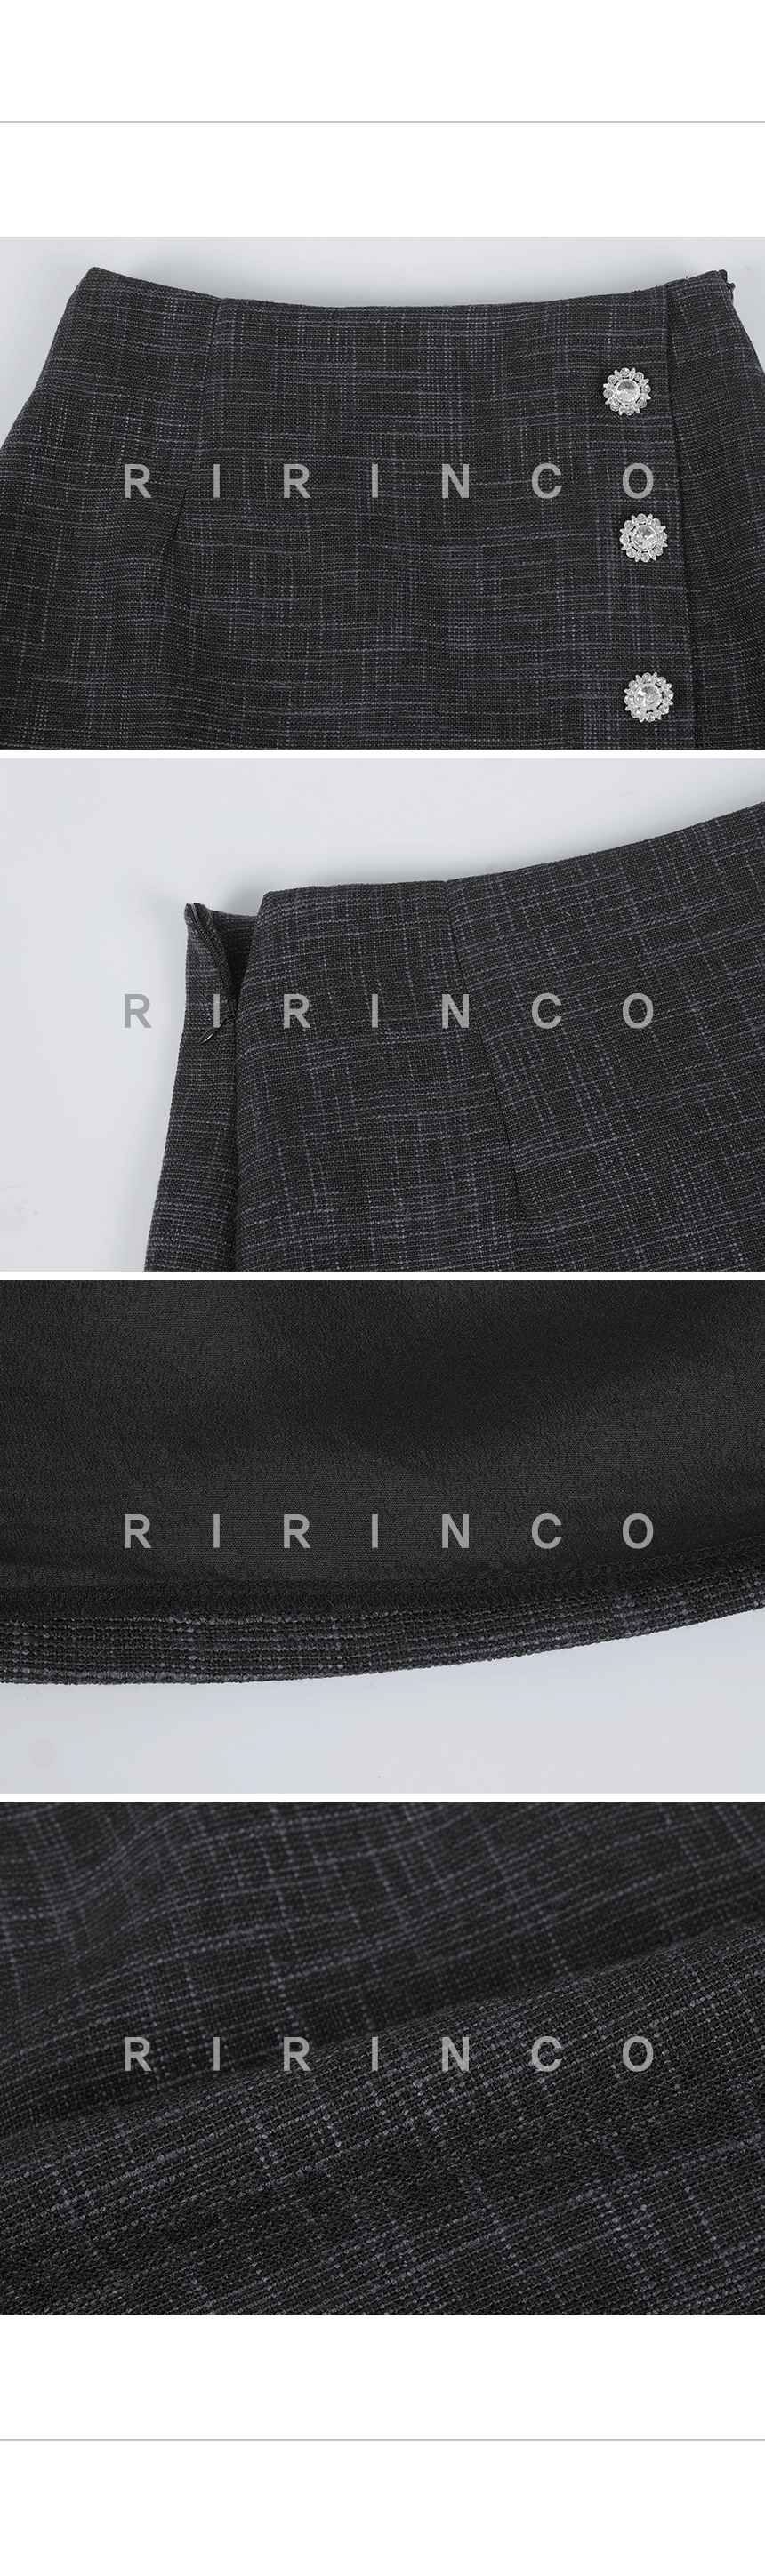 RIRINCO ツイードラップタイプミニスカート